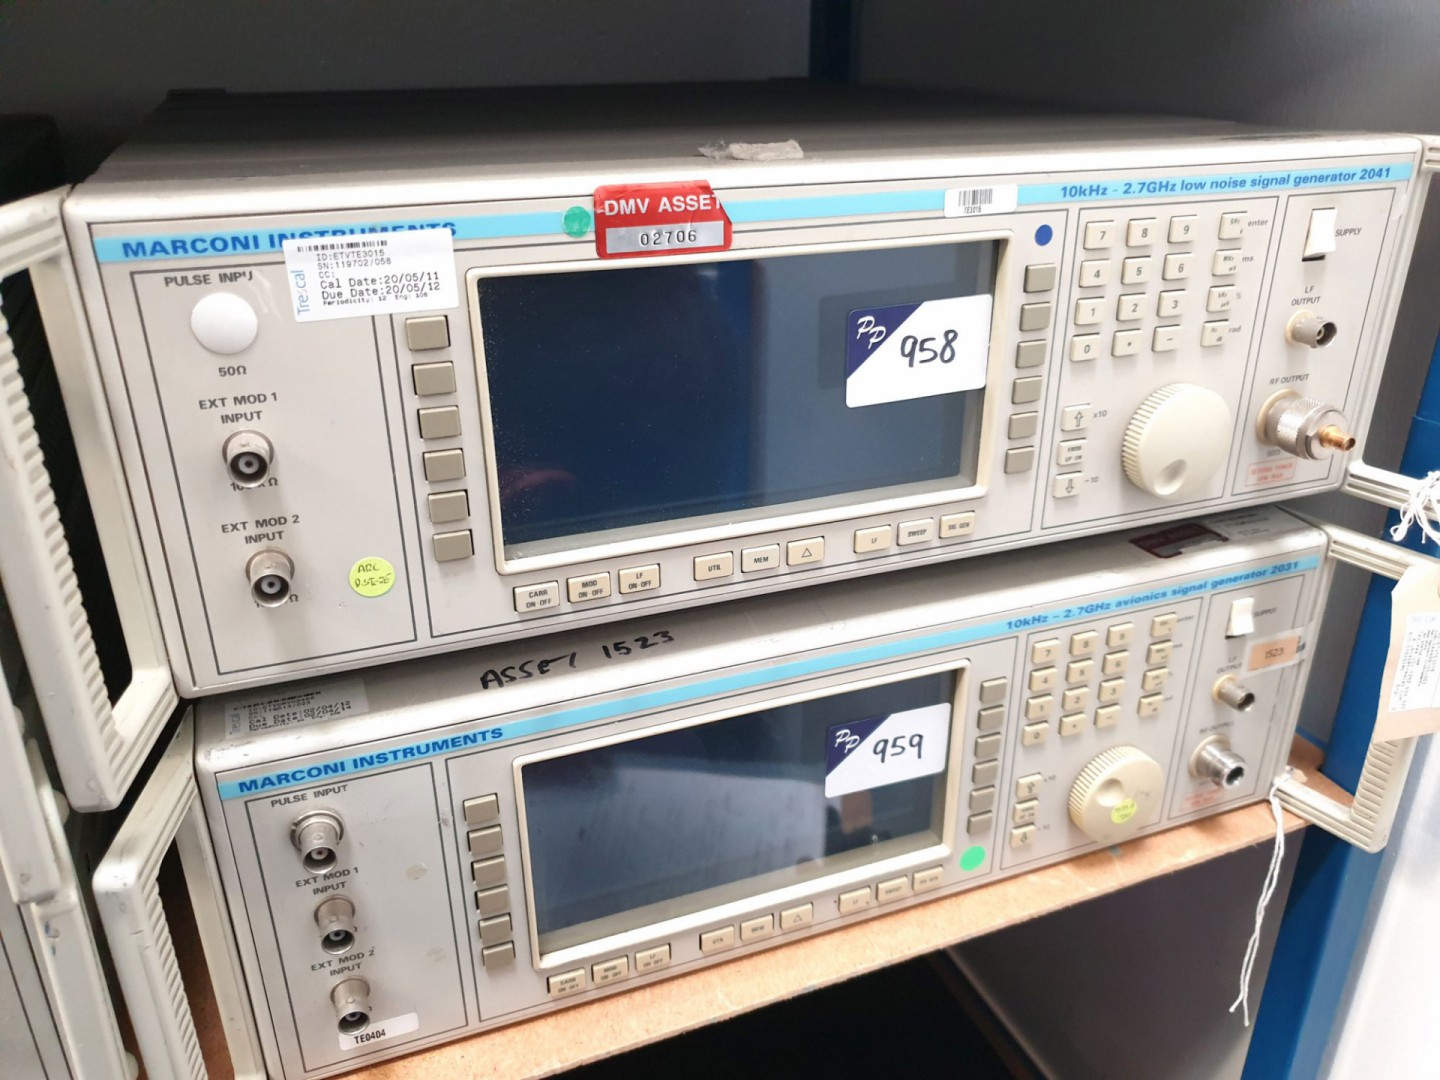 Marconi 2031 avioics signal generator